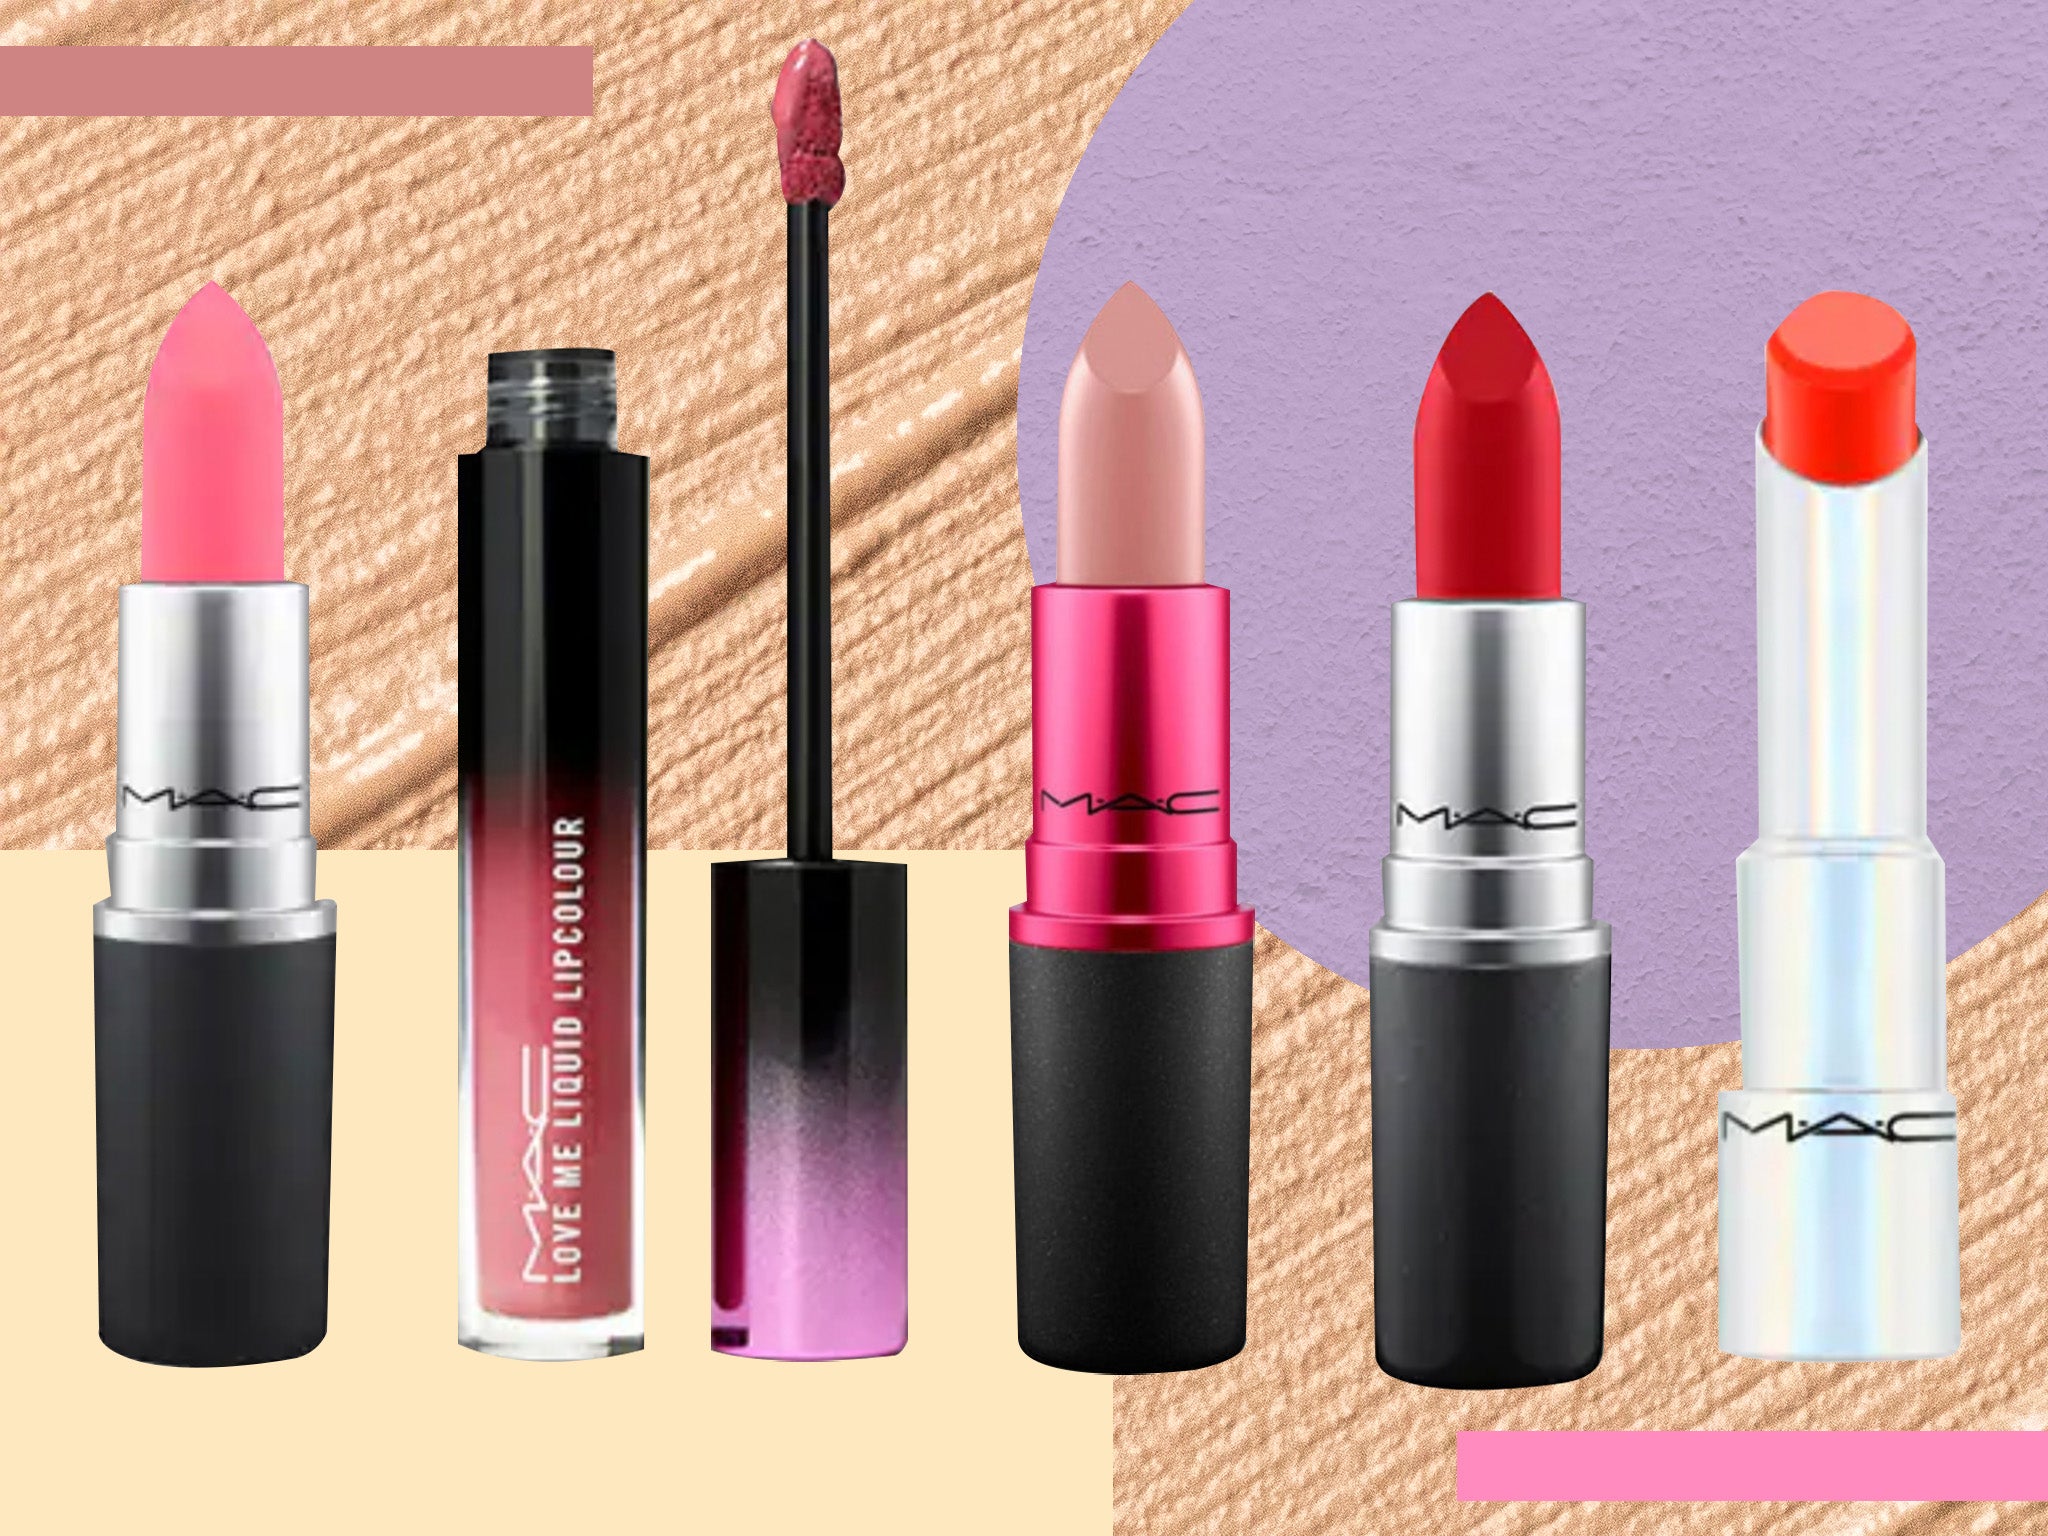 Velvet Teddy: The Perfect Shade of Lipstick